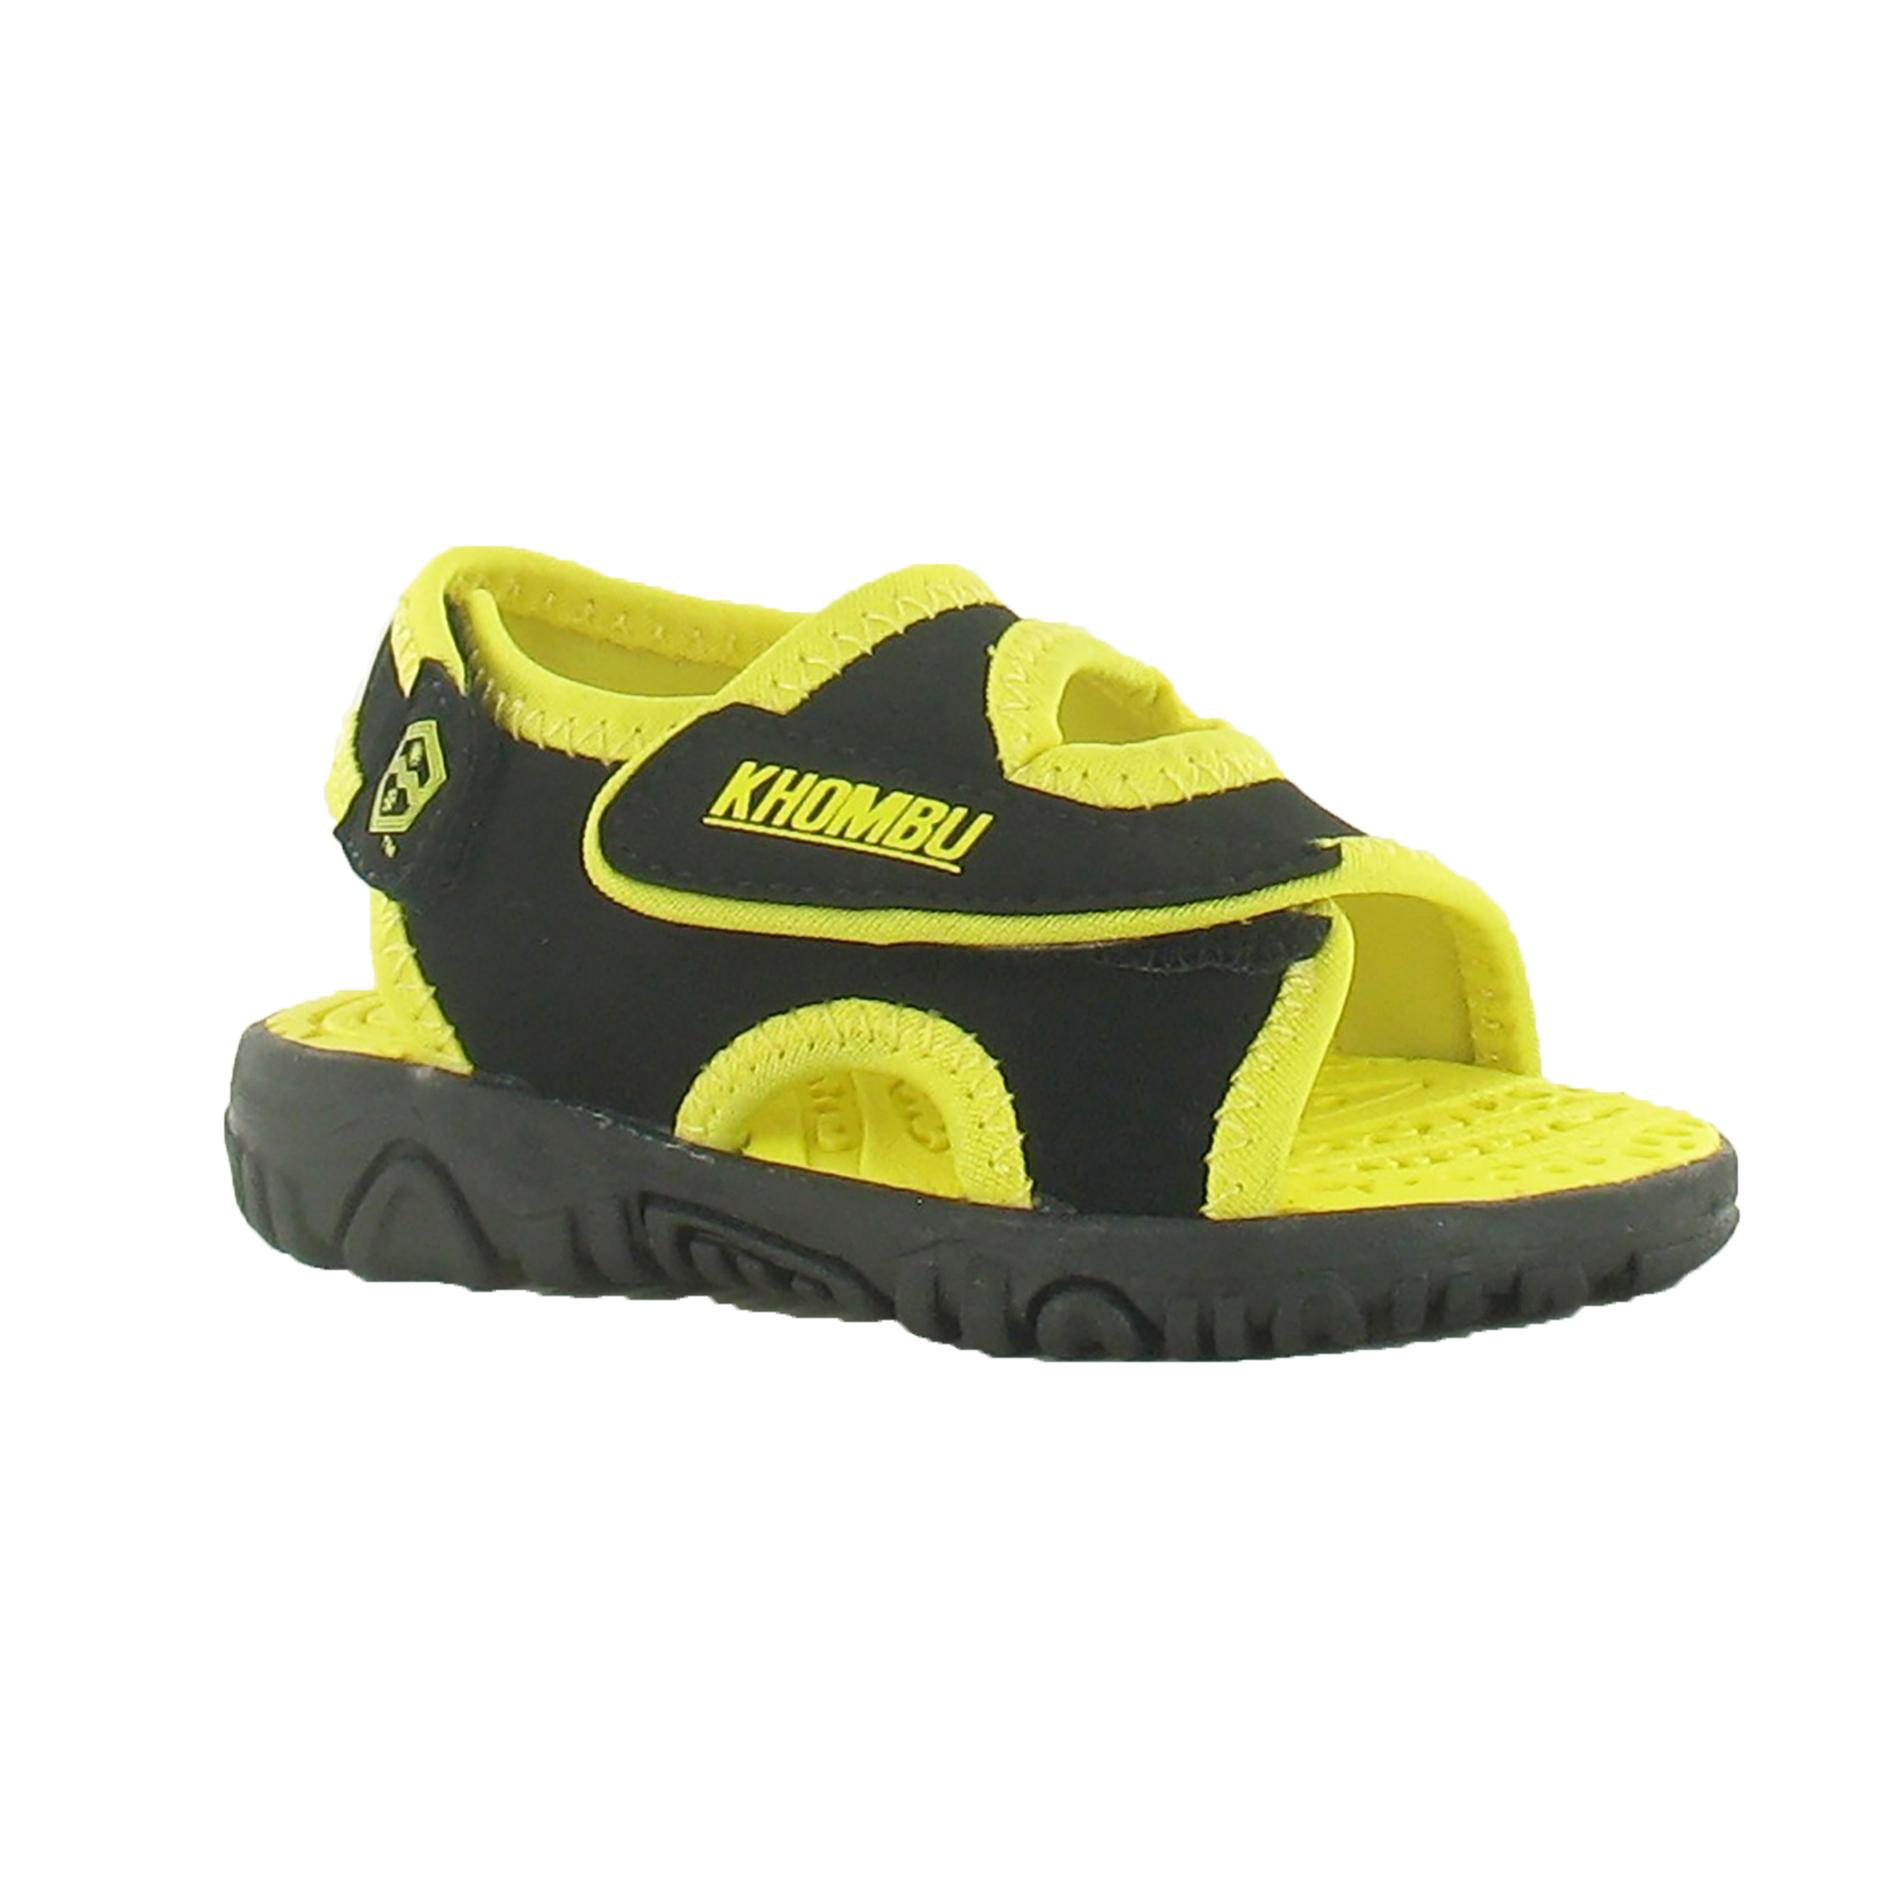 Khombu Toddler Boys' Anthias Sport Sandal - Black/Yellow